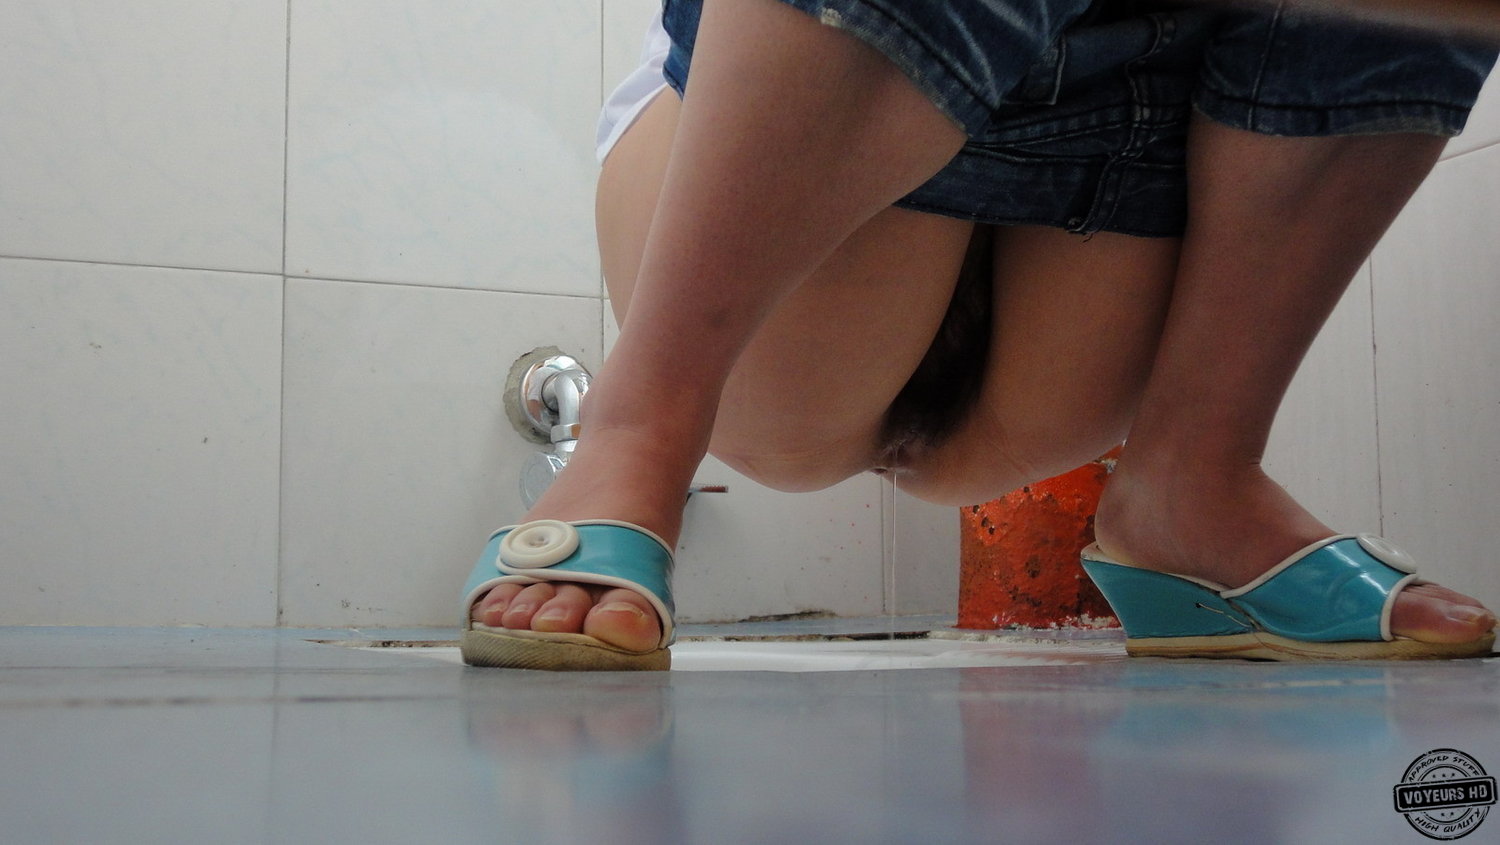 Caught Pee in Asian Toilets - Voyeur Videos.